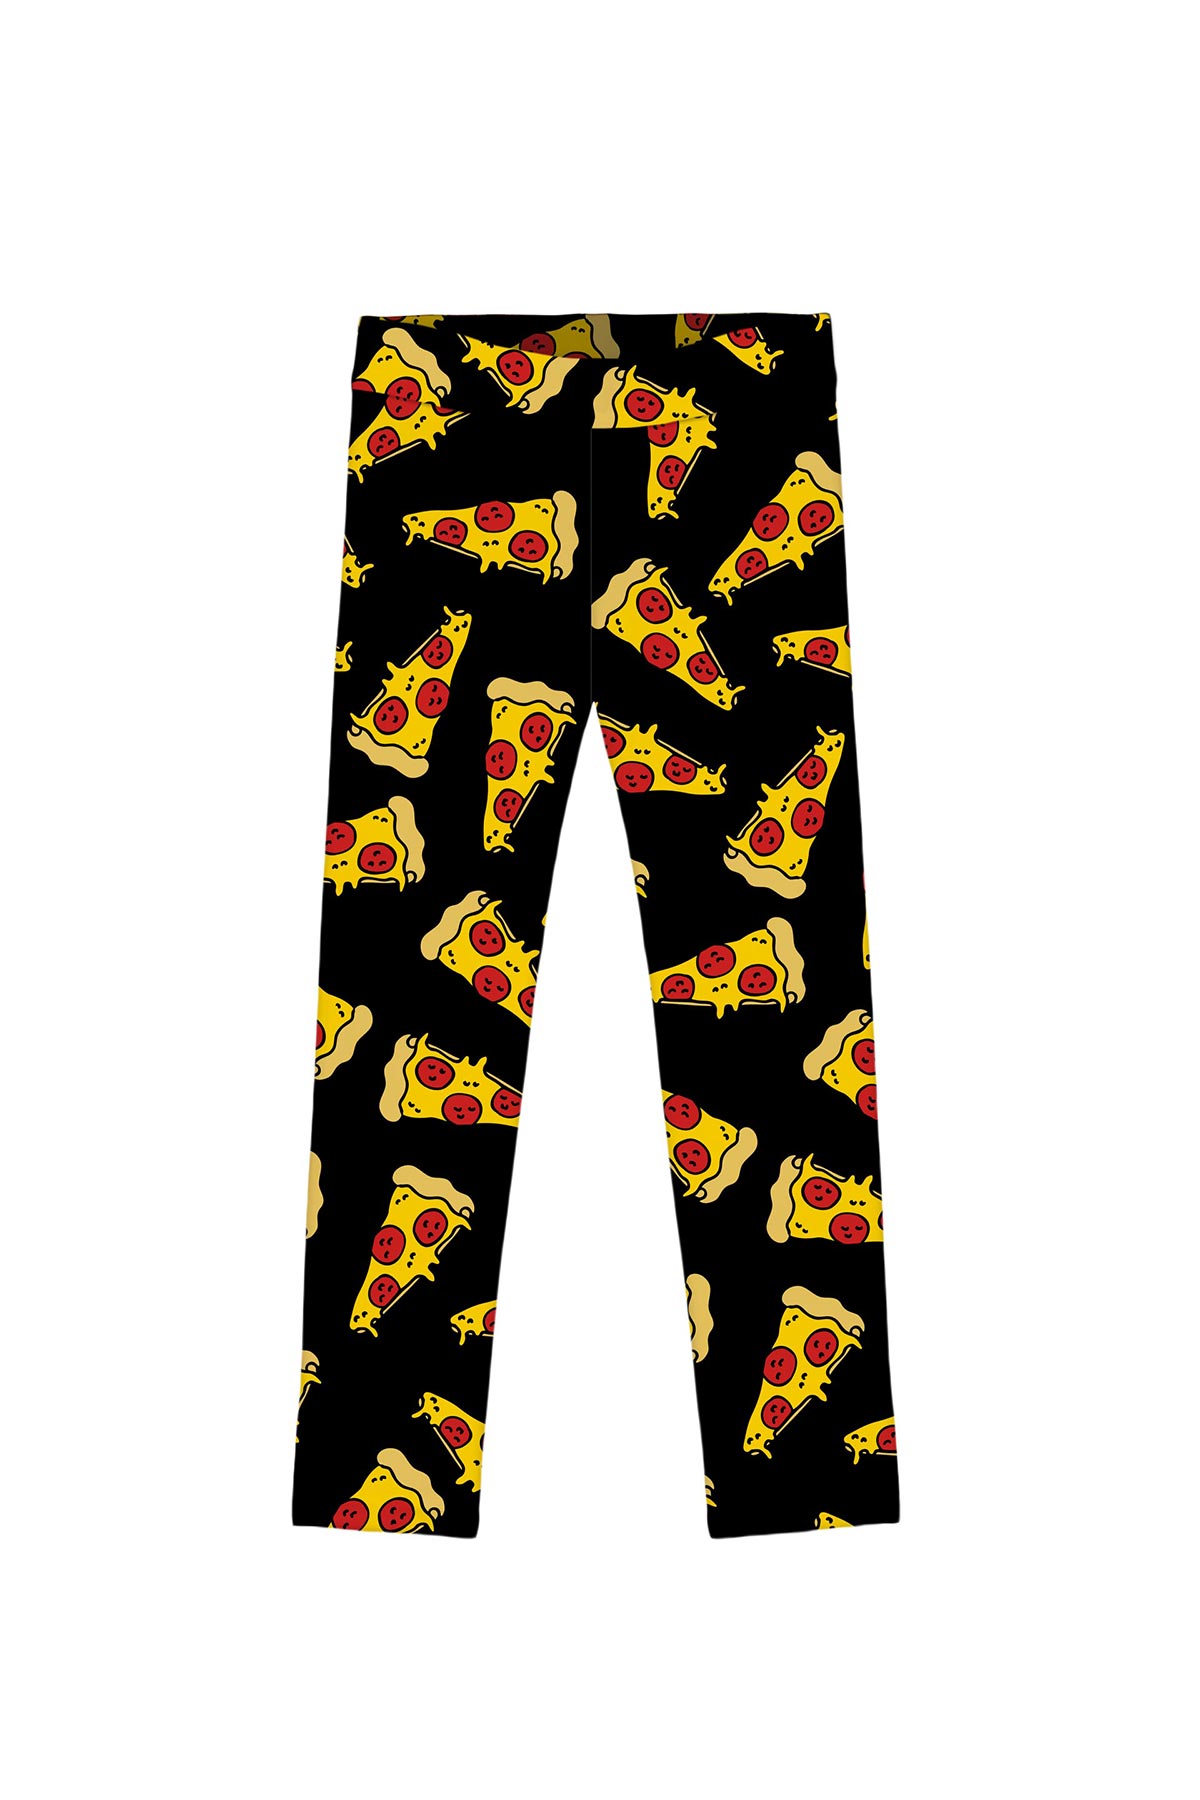 Pepperoni Lucy Black Pizza Printed Cute Leggings - Girls - Pineapple Clothing